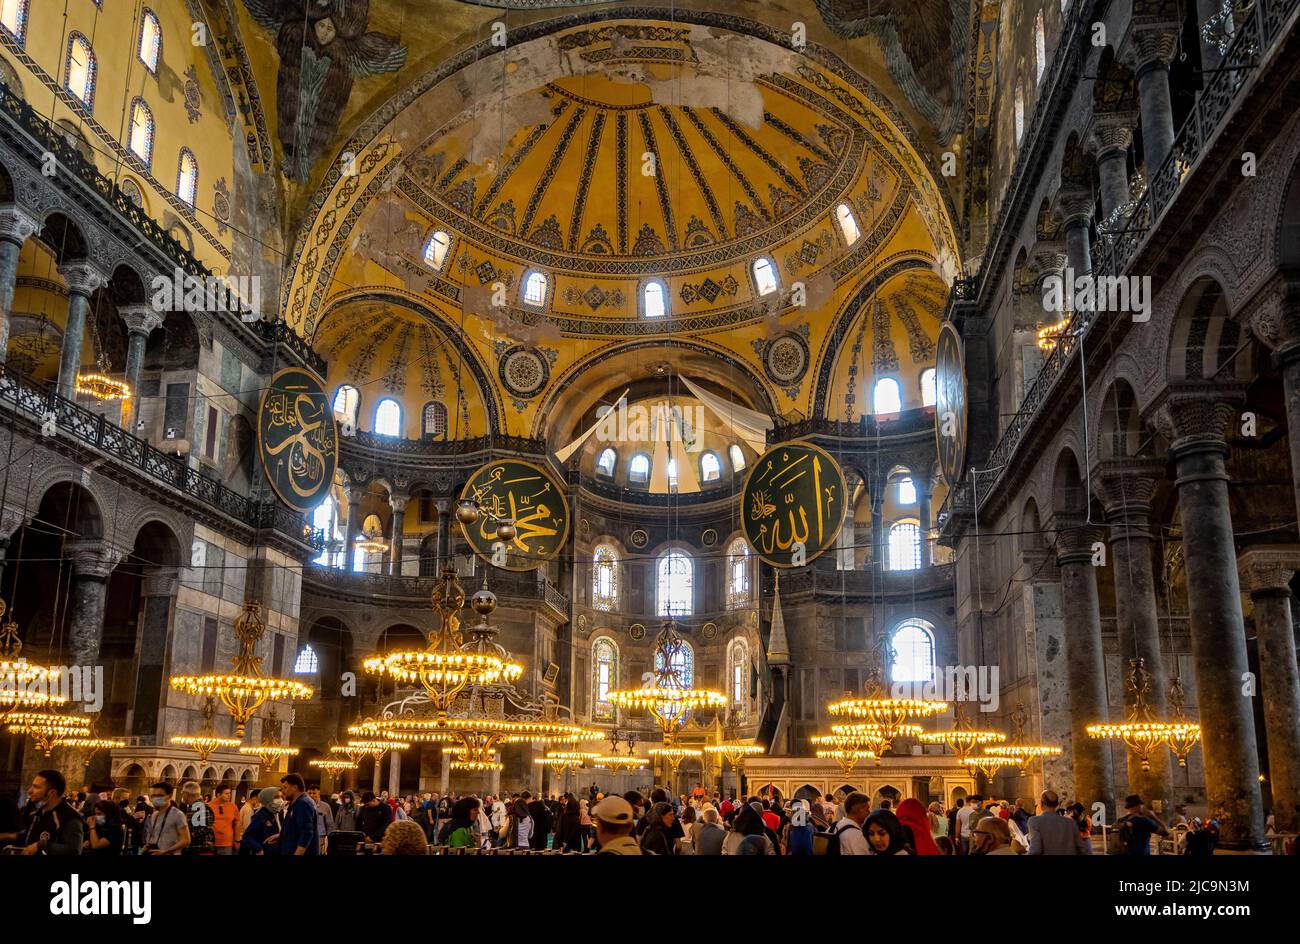 Exquisitely decorated interior of the Hagia Sophia, Istanbul, Türkiye. Stock Photo